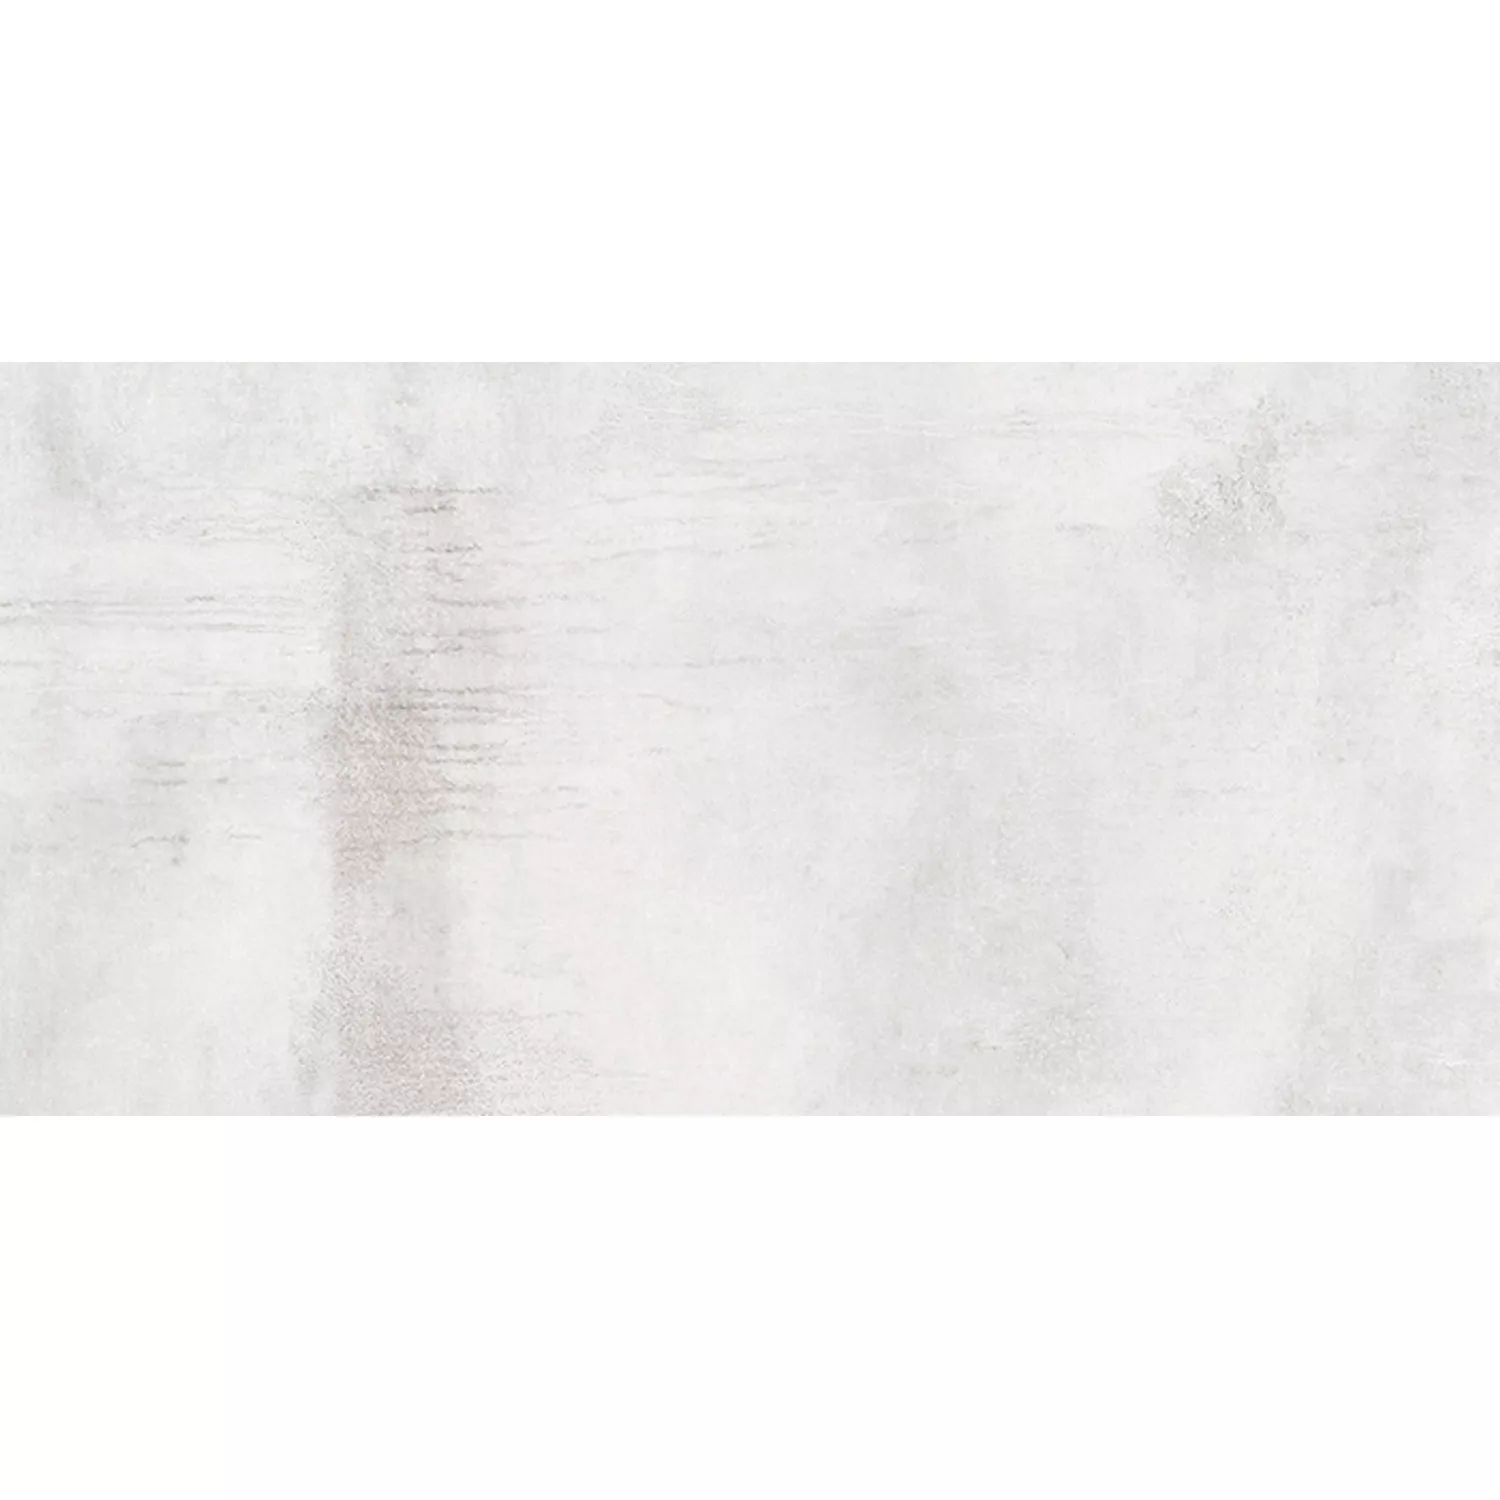 Vzorek Podlahové Dlaždice Tycoon Betonový Vzhled R10 Stříbrná 30x60cm